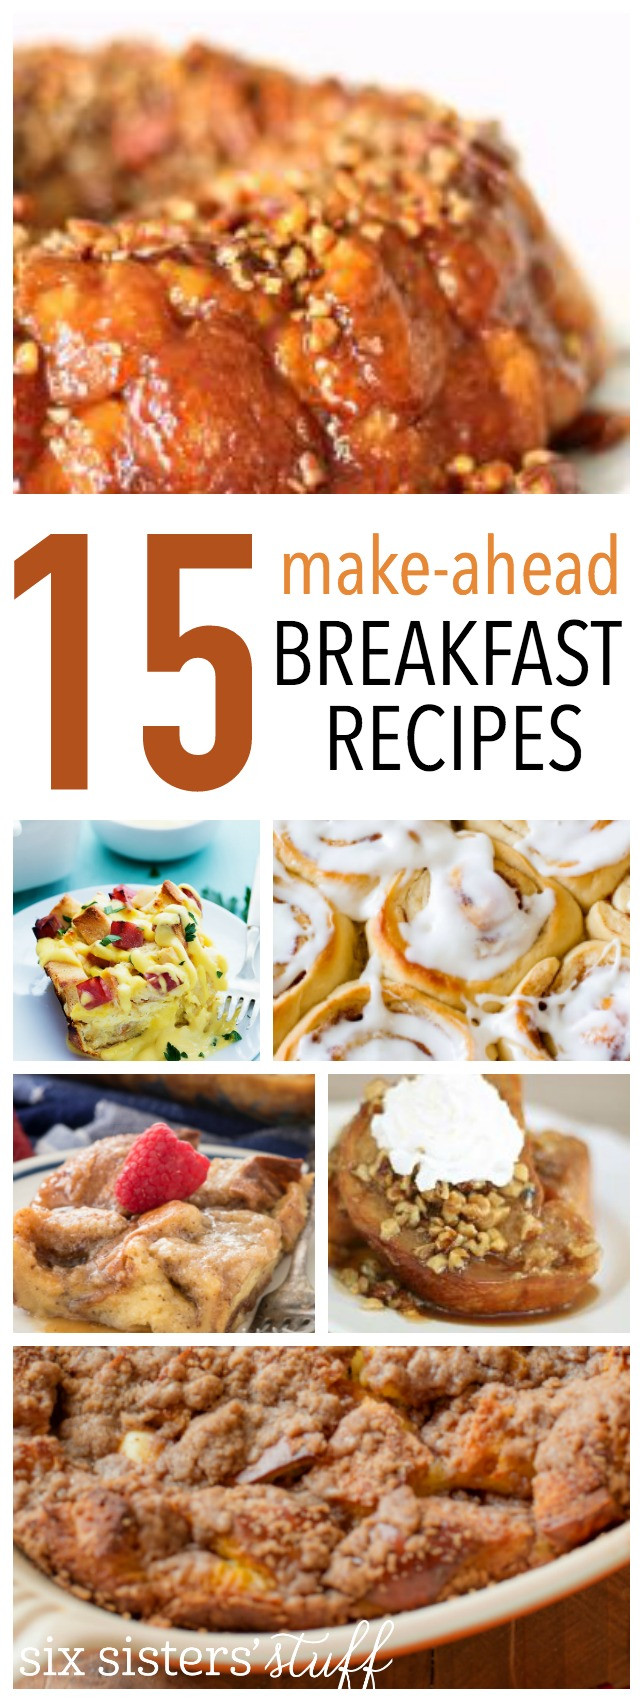 Make Ahead Breakfast Recipes
 15 Make Ahead Christmas Breakfast Recipes